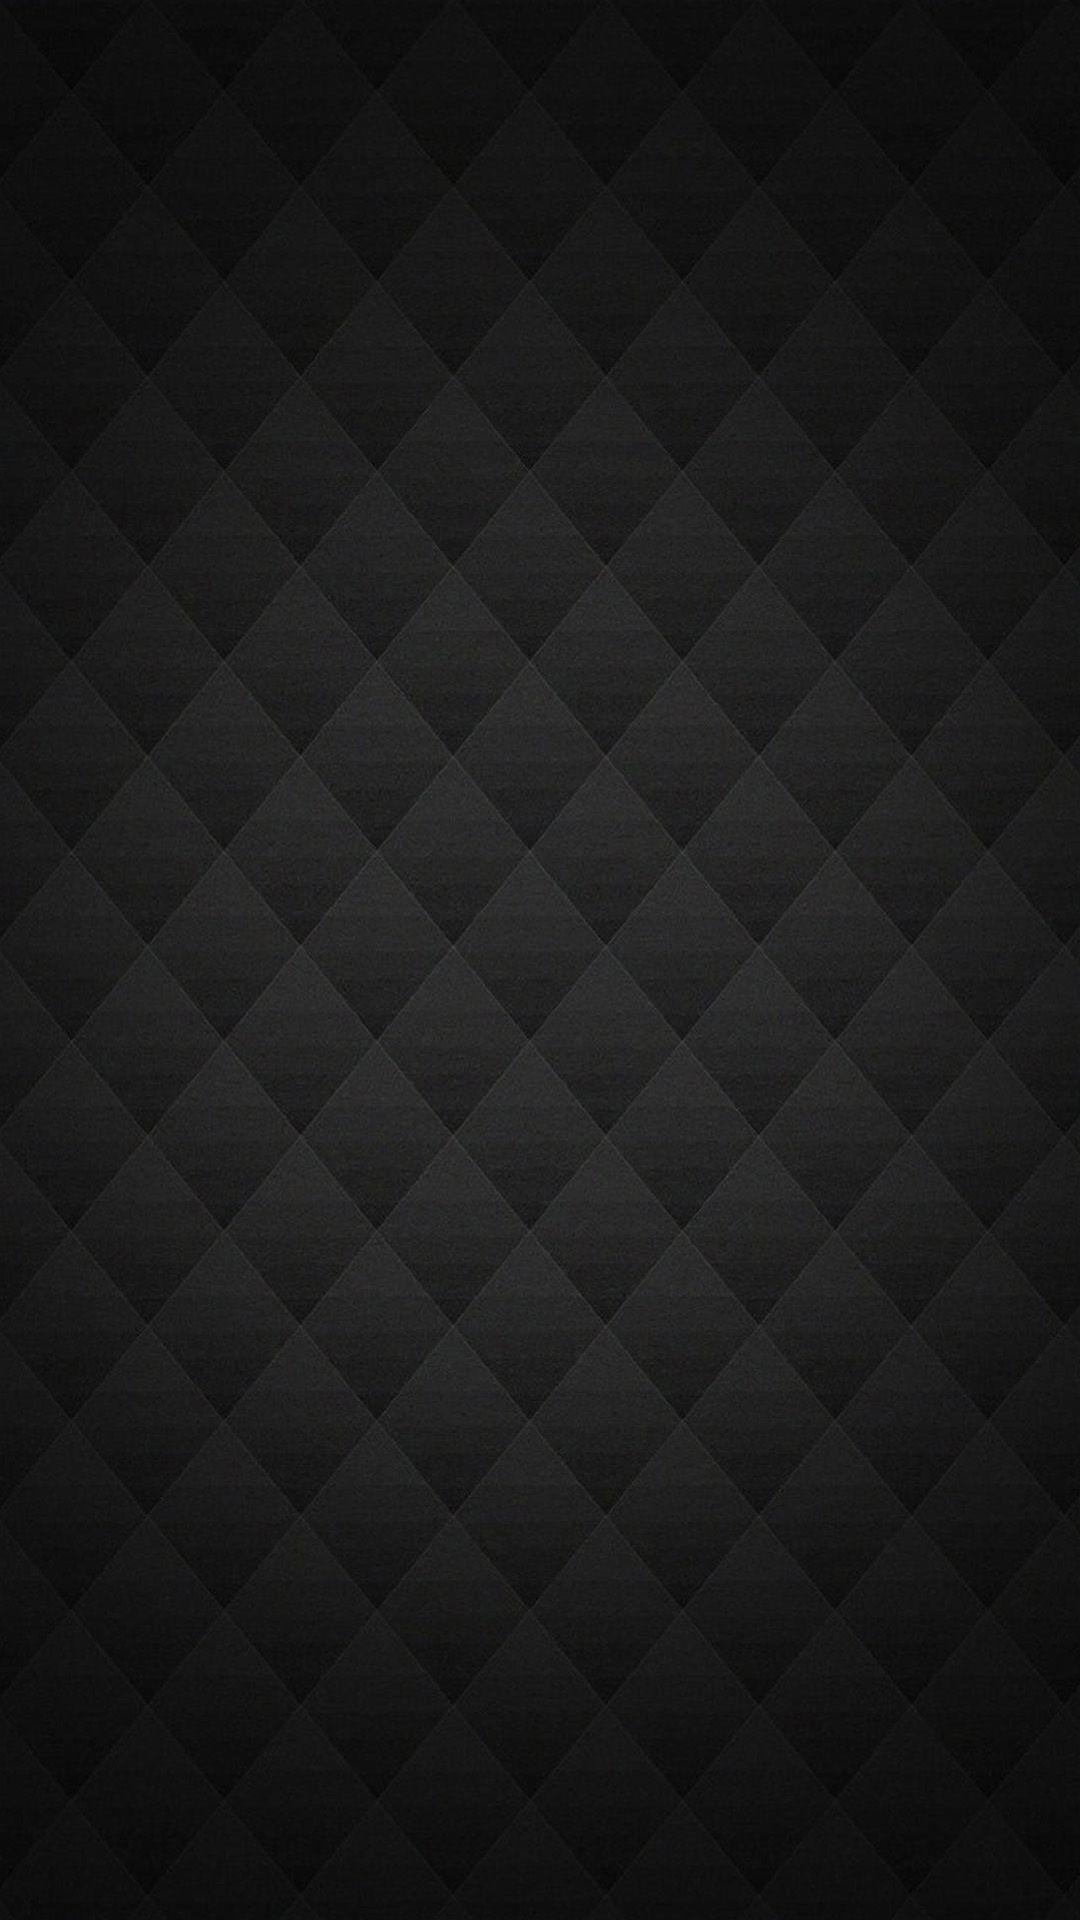 Wallpaper Iphone X Carbon